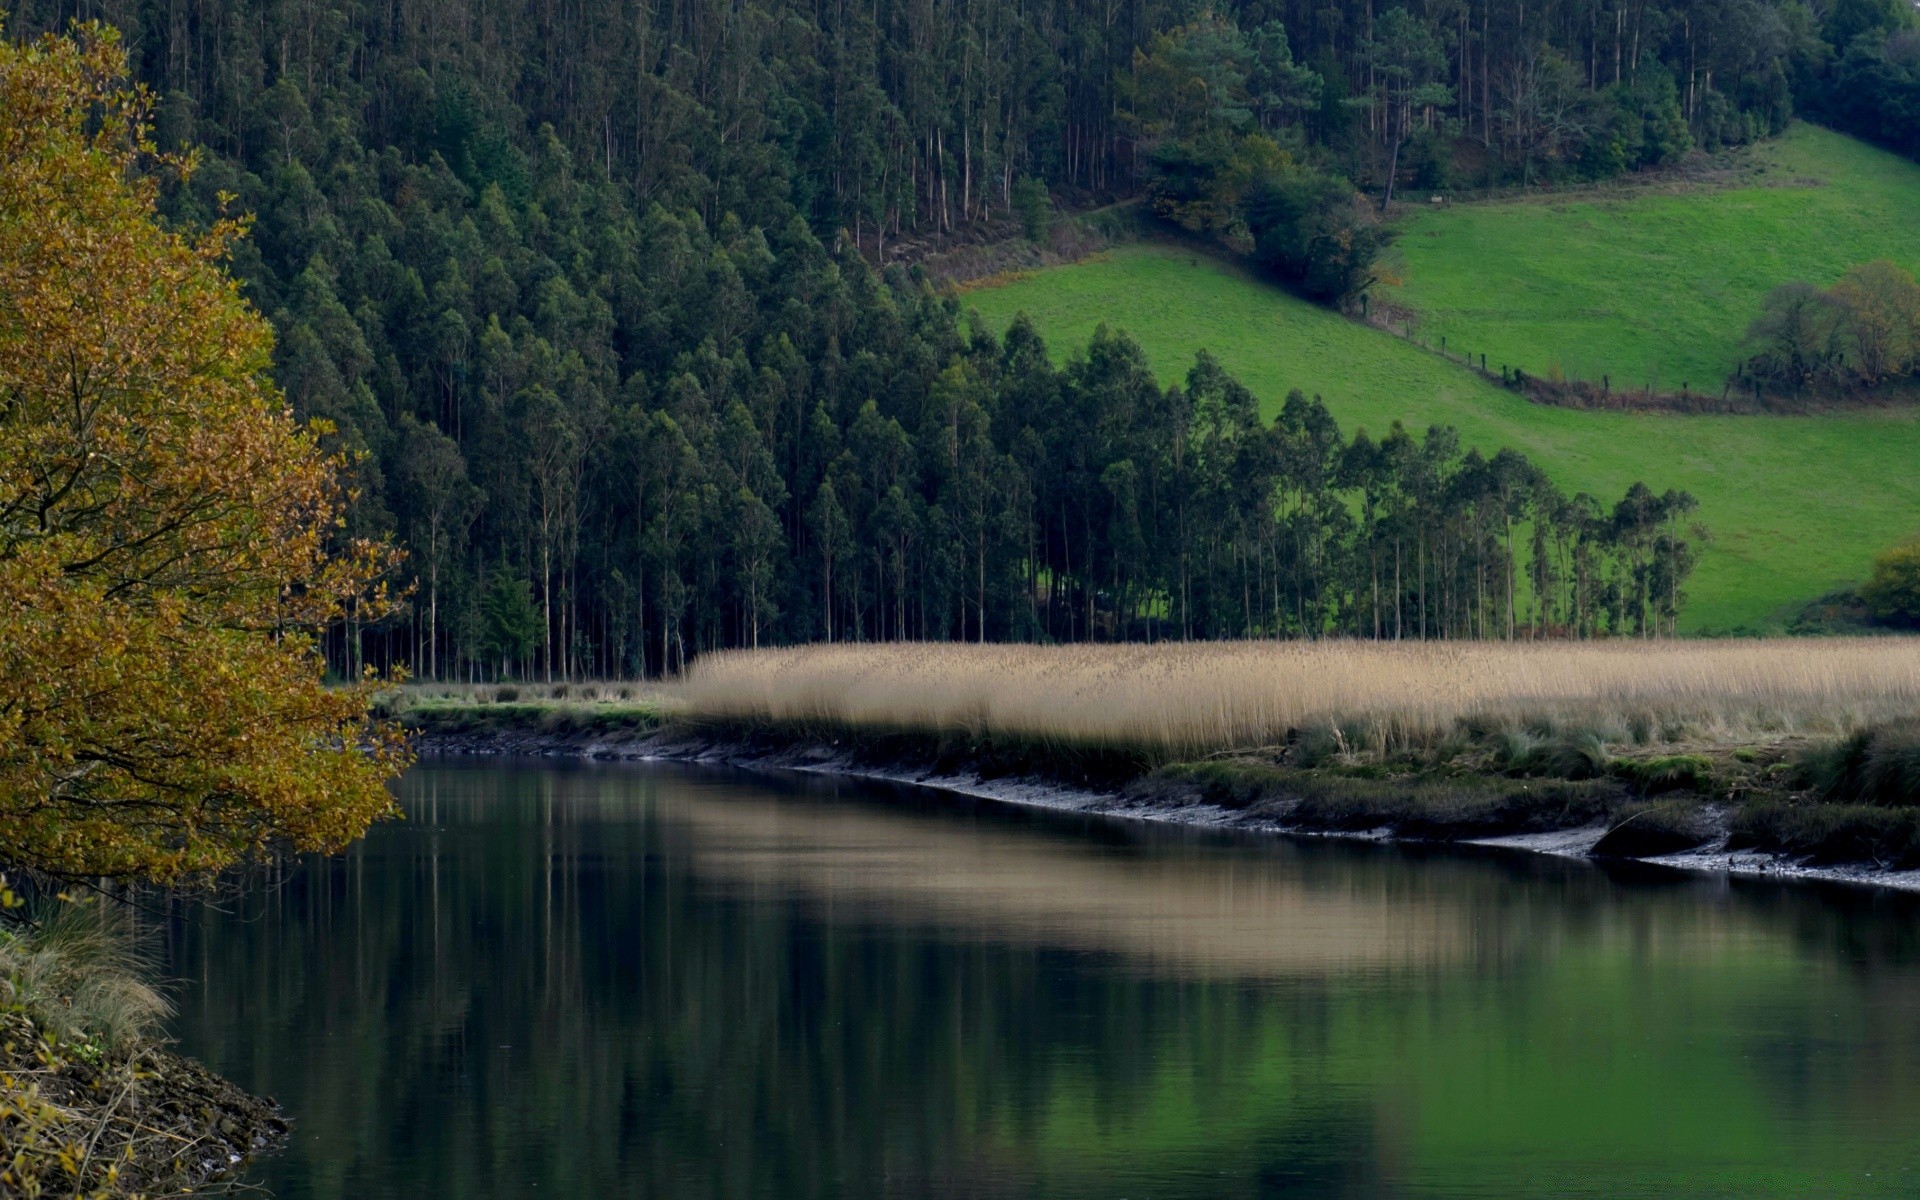 europe water river lake landscape tree outdoors nature reflection wood travel scenic fall daylight